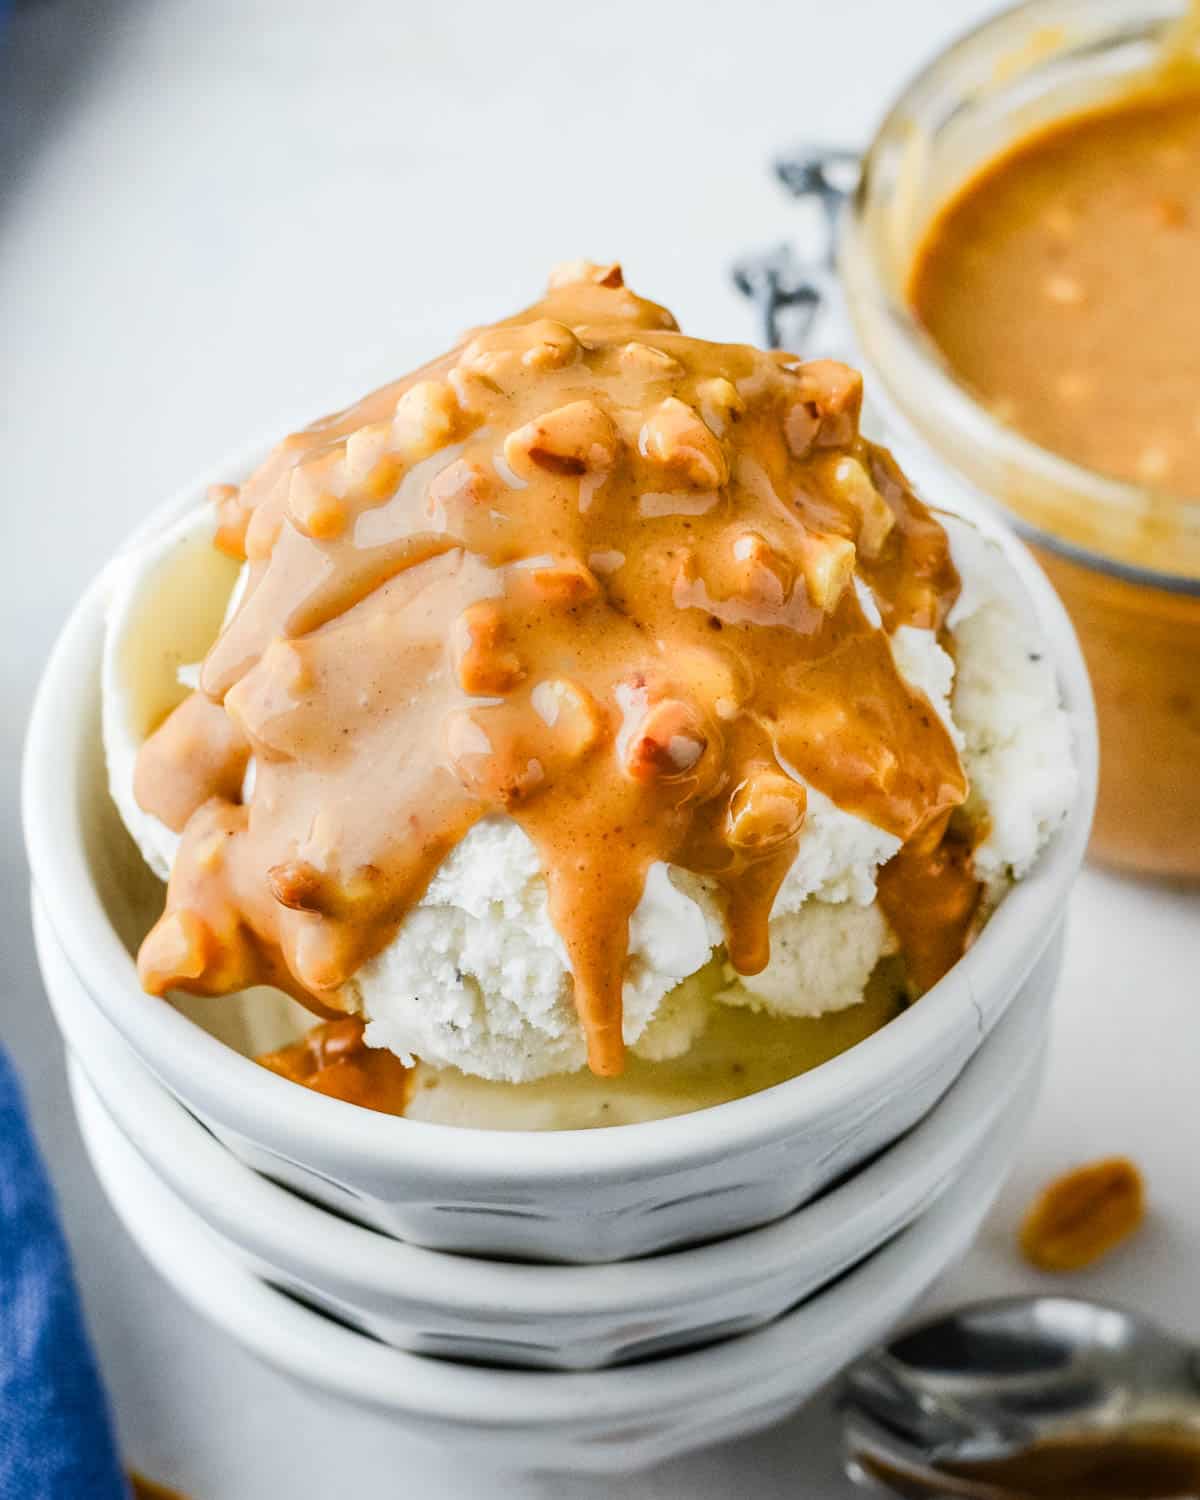 Peanut butter magic shell over ice cream.